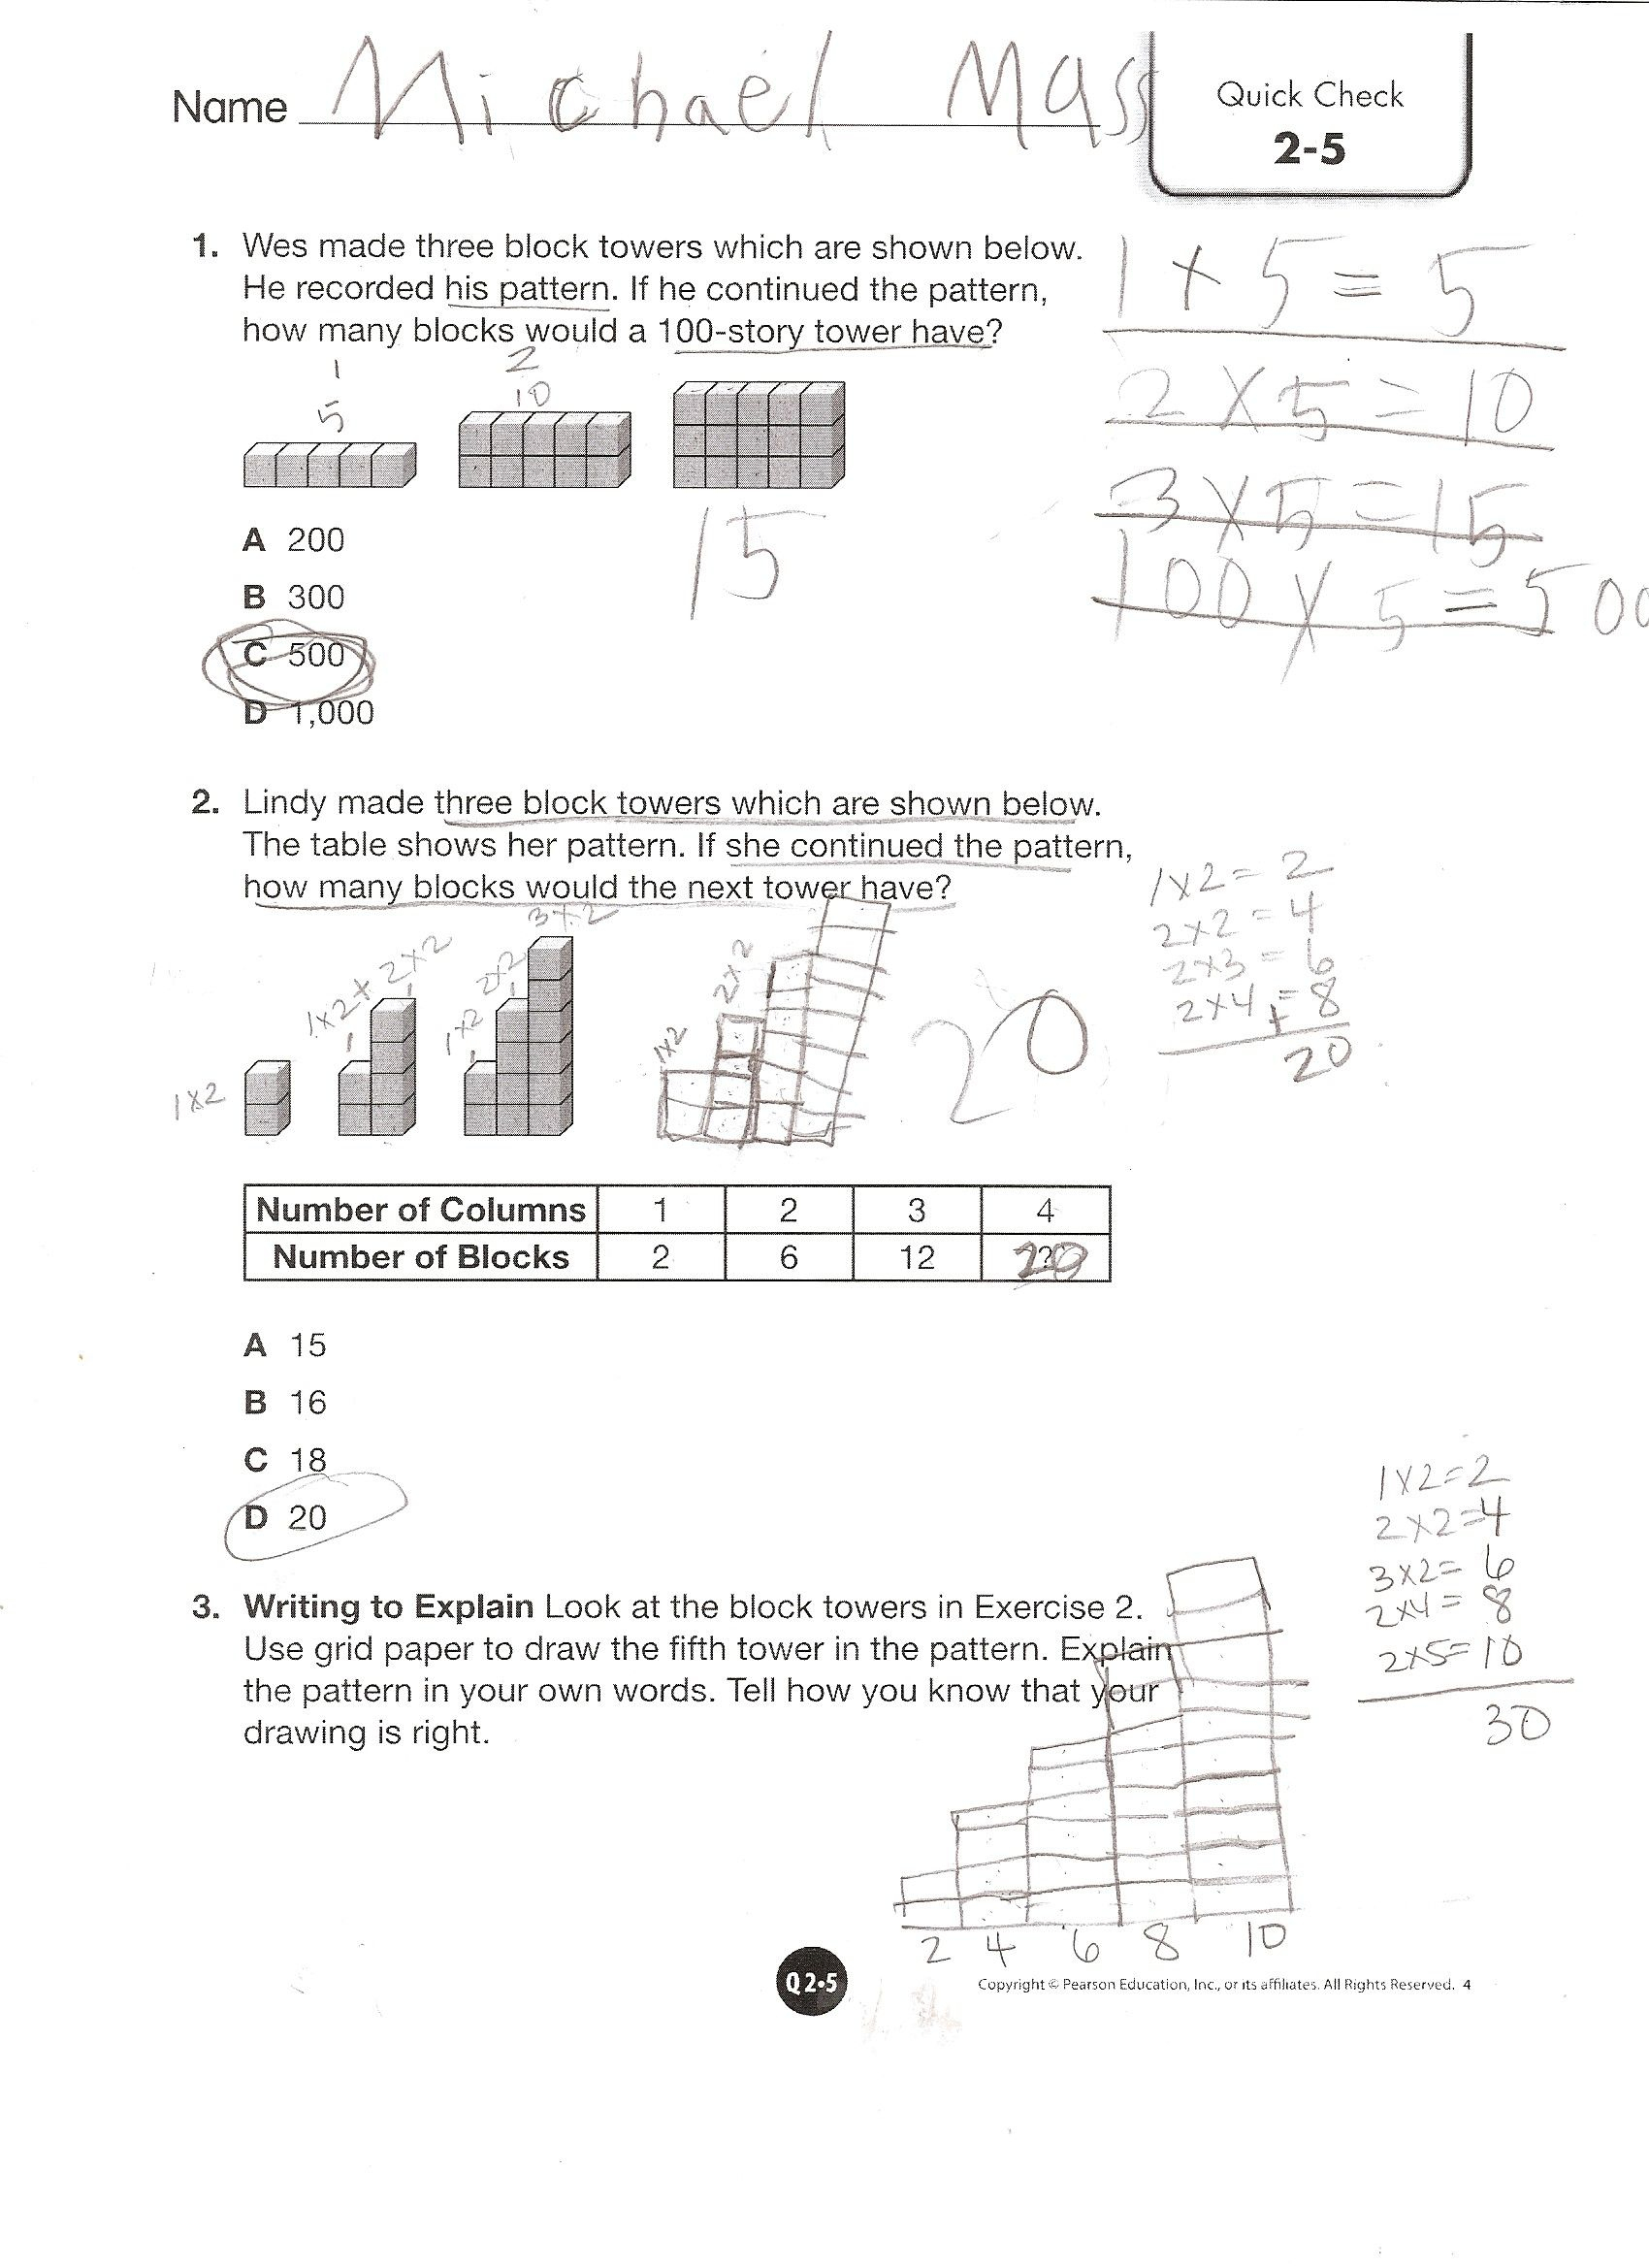 Envision Math Grade 4 Topic 2-5 Quick Check | Envision Math